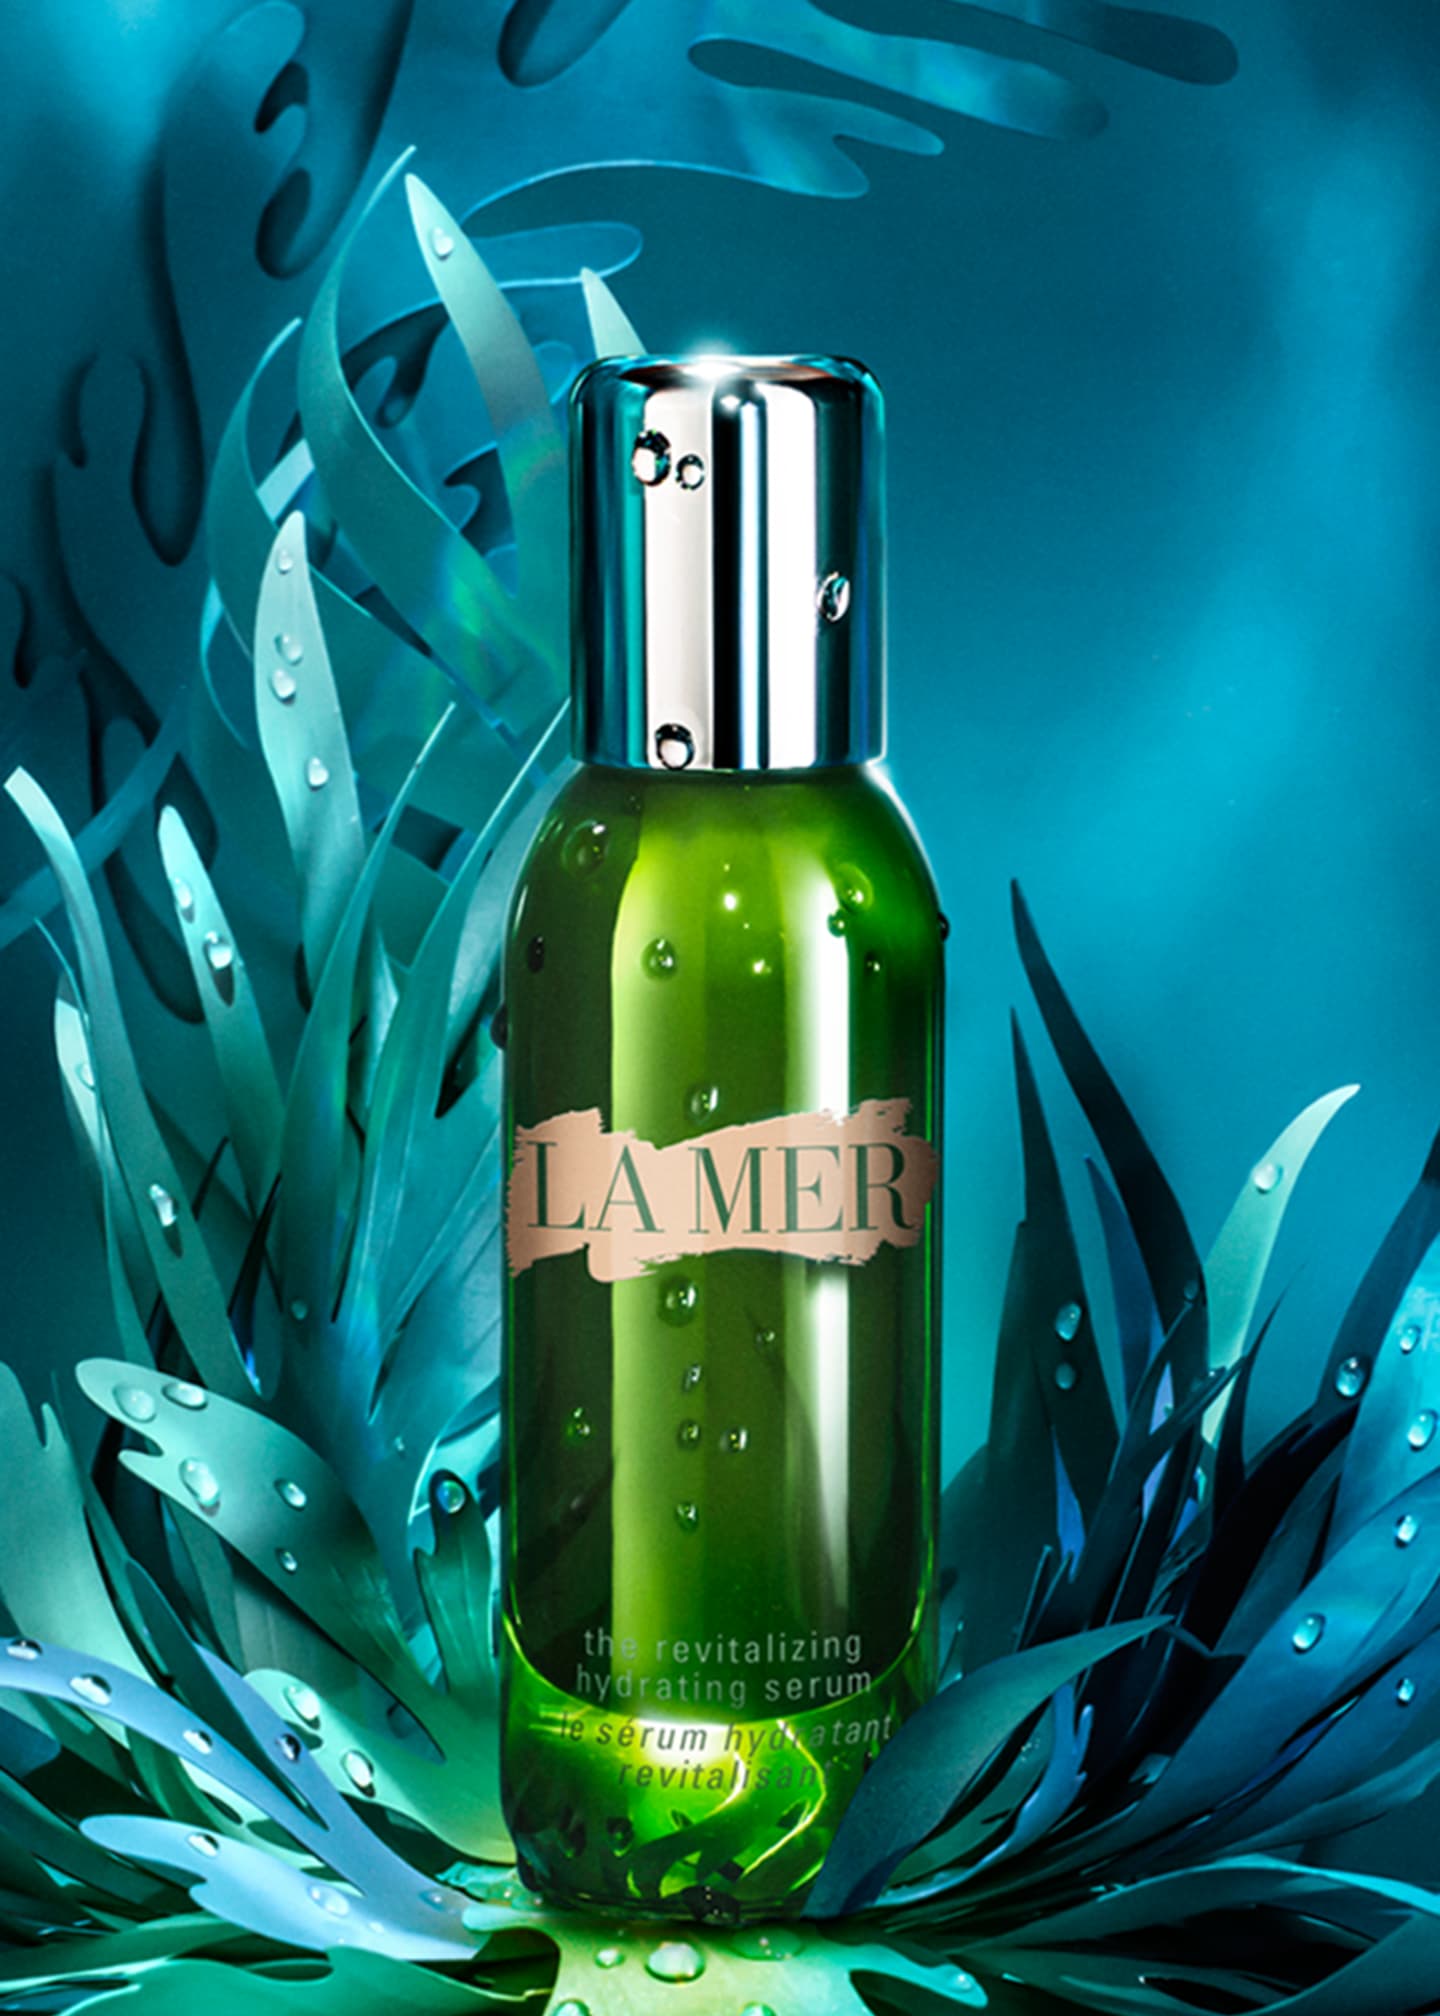 La Mer The Revitalizing Hydrating Serum, 1 oz. Image 2 of 3